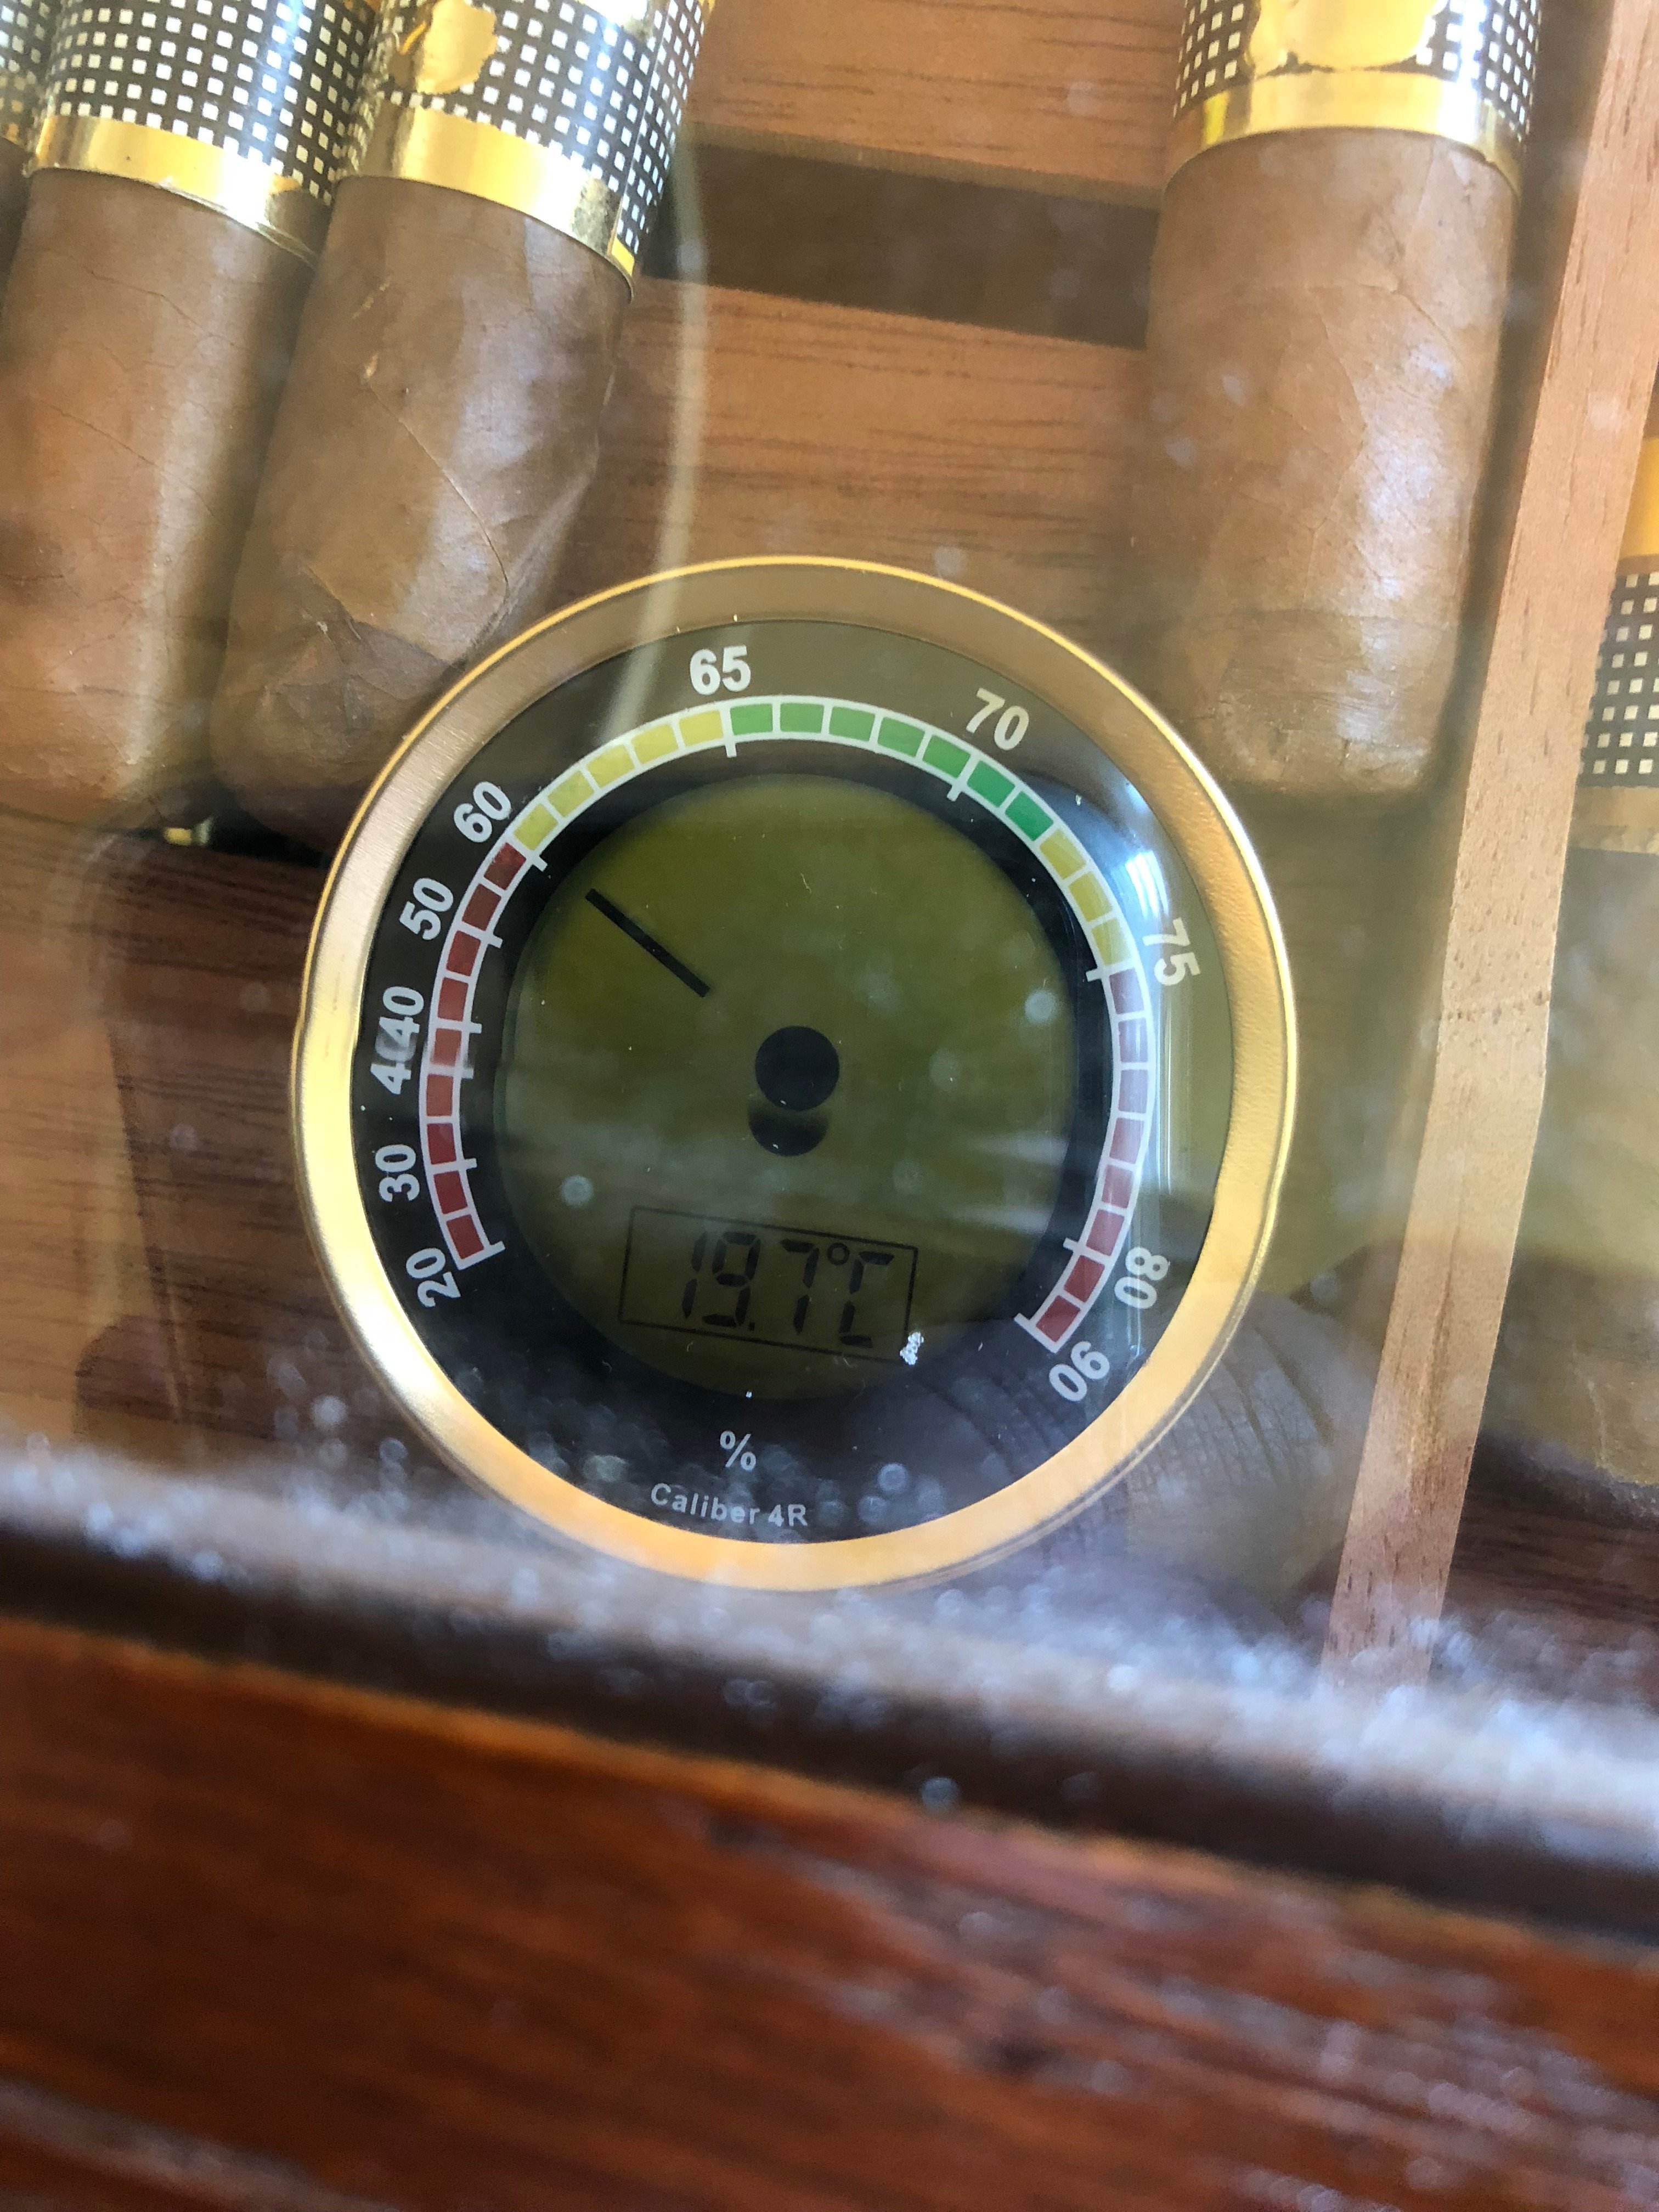 Cigar Oasis Caliber 4R Gold Digital/Analog Hygrometer by Western Humidor